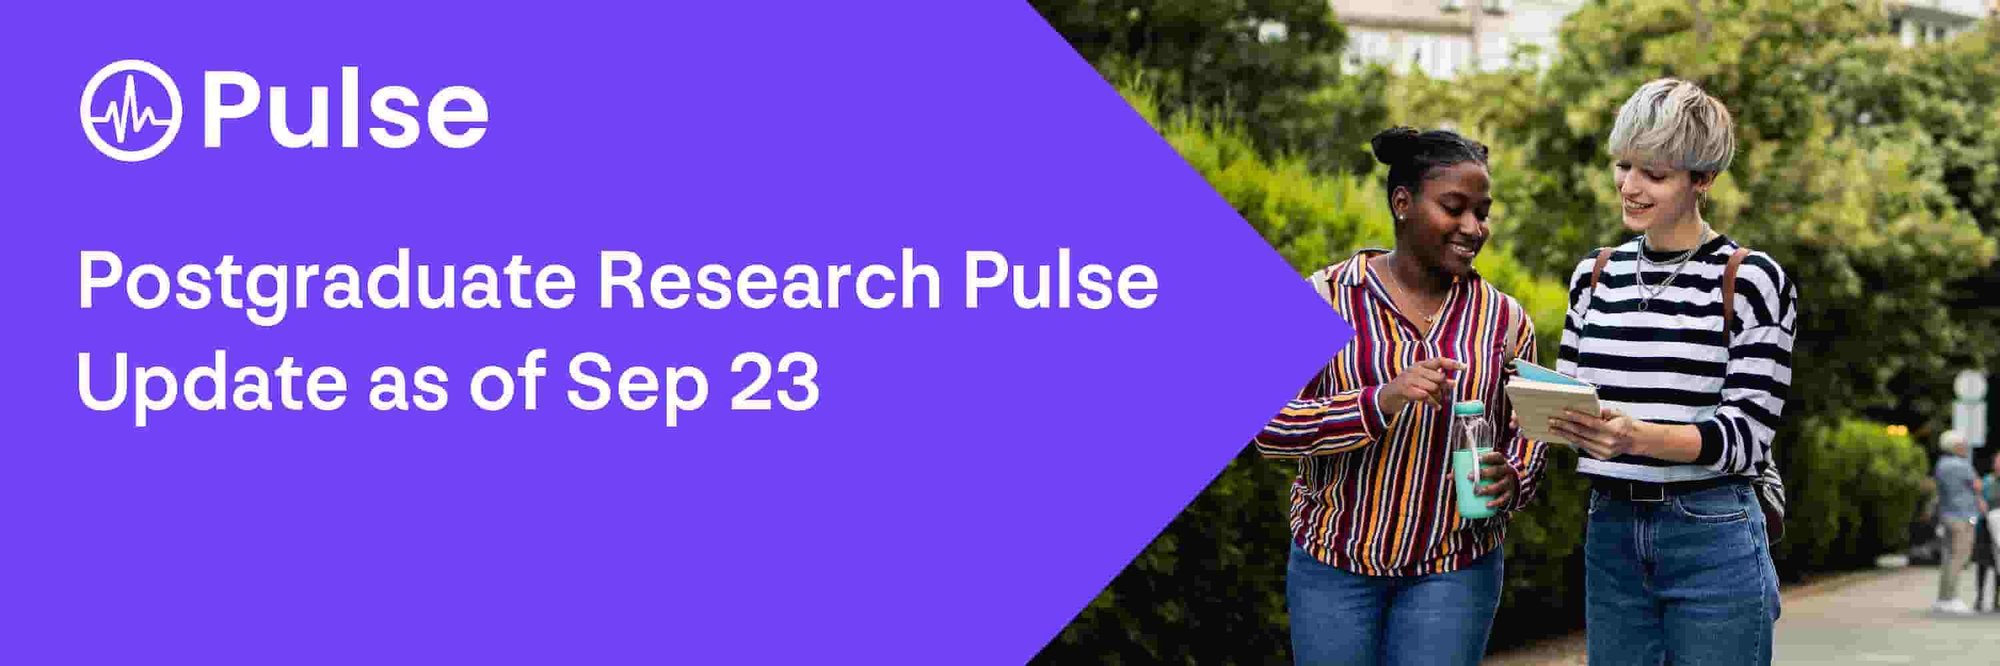 Pulse Postgraduate Research Pulse Update as of Sep 23